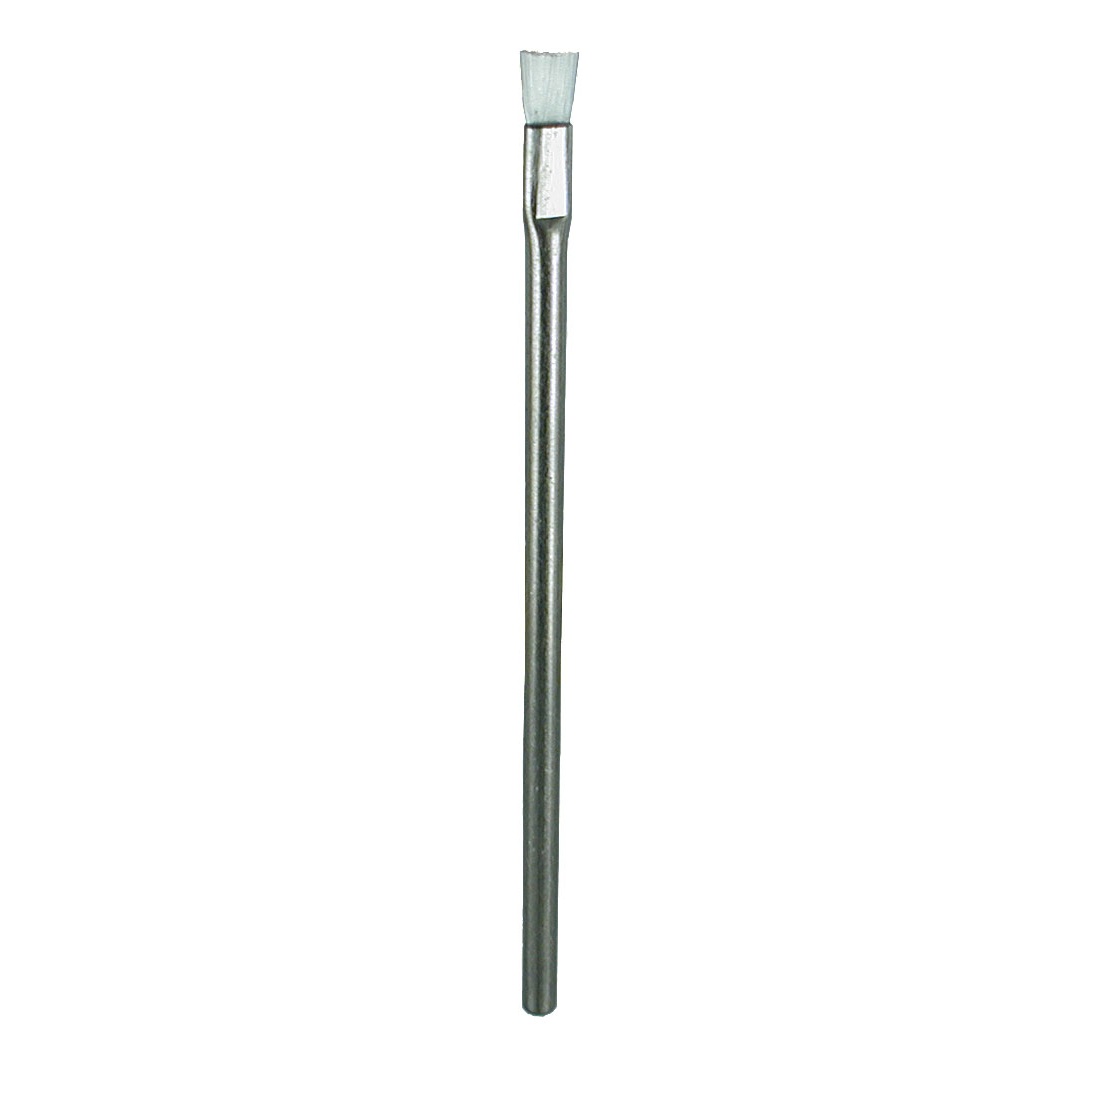 Applicator Brush — 0.006" PEEK Bristle / 3/8" Diameter Stainless Steel Tube Handle